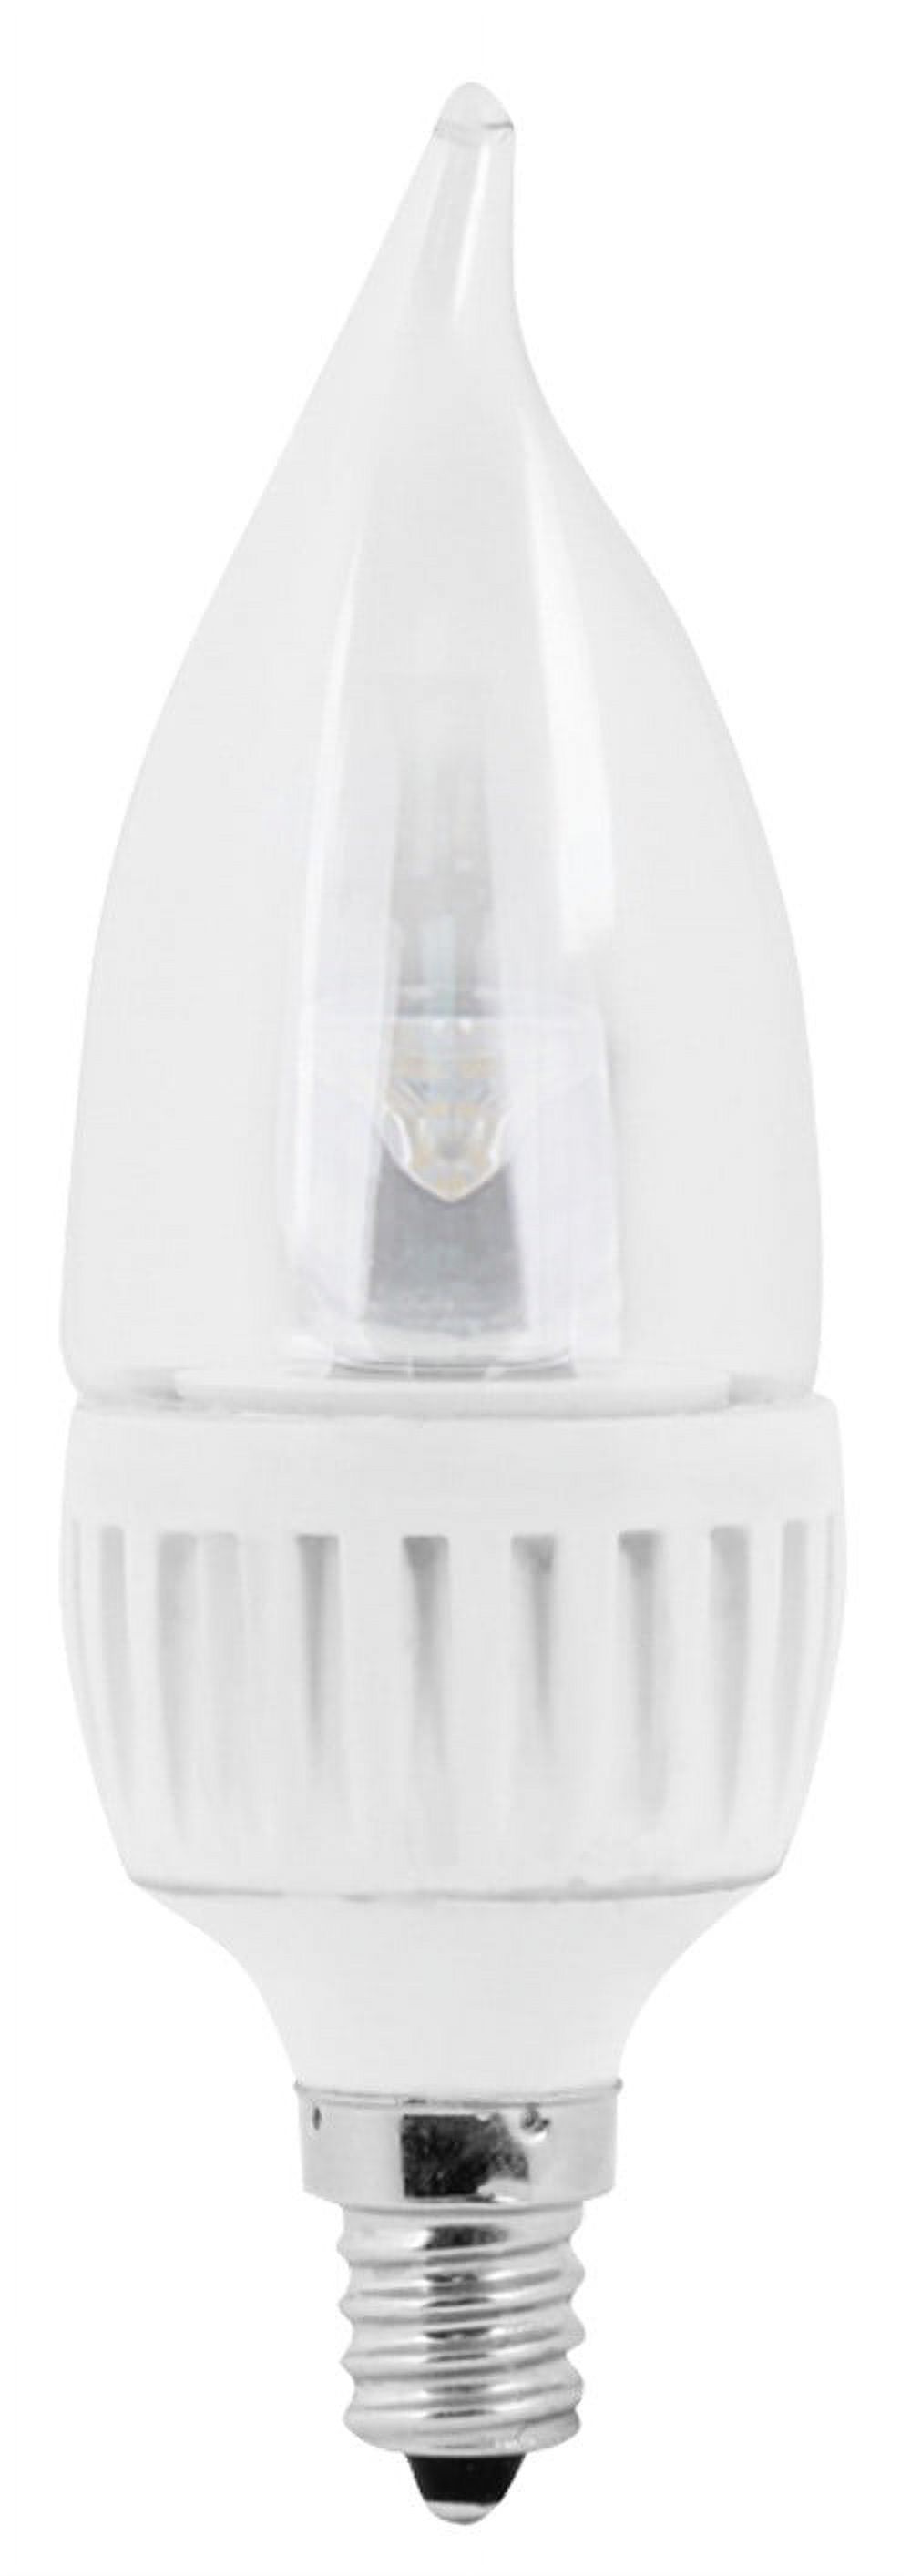 Feit Electric 4W LED Candelabra Light Bulb - 2 pk. - image 3 of 3